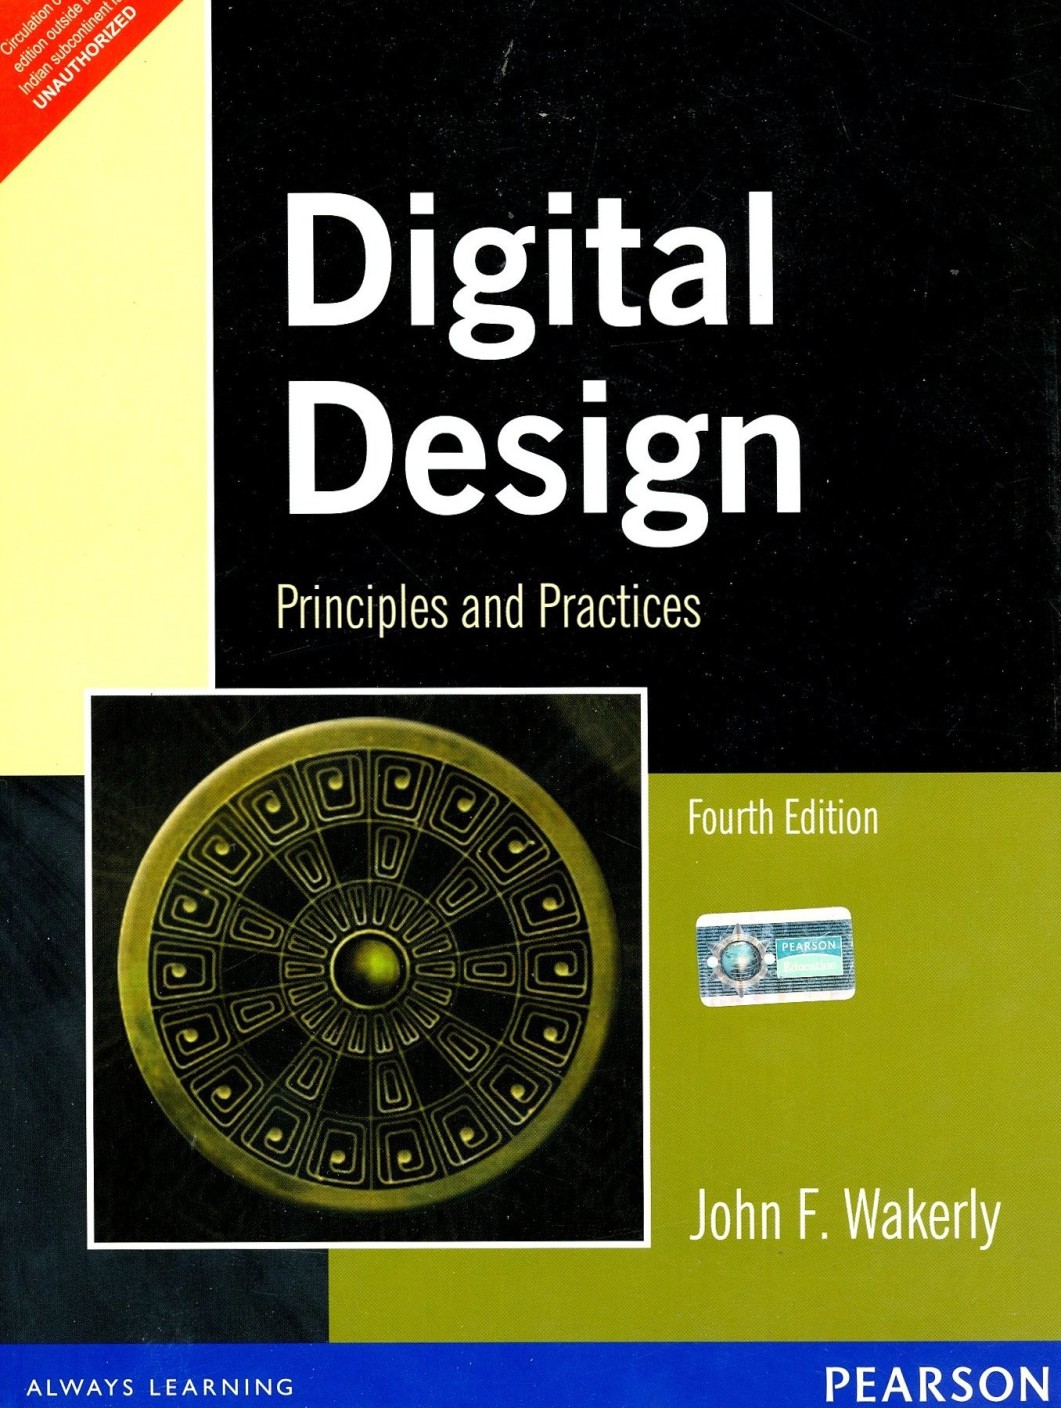 Digital Design : Principles and Practices 4th Edition - Buy Digital